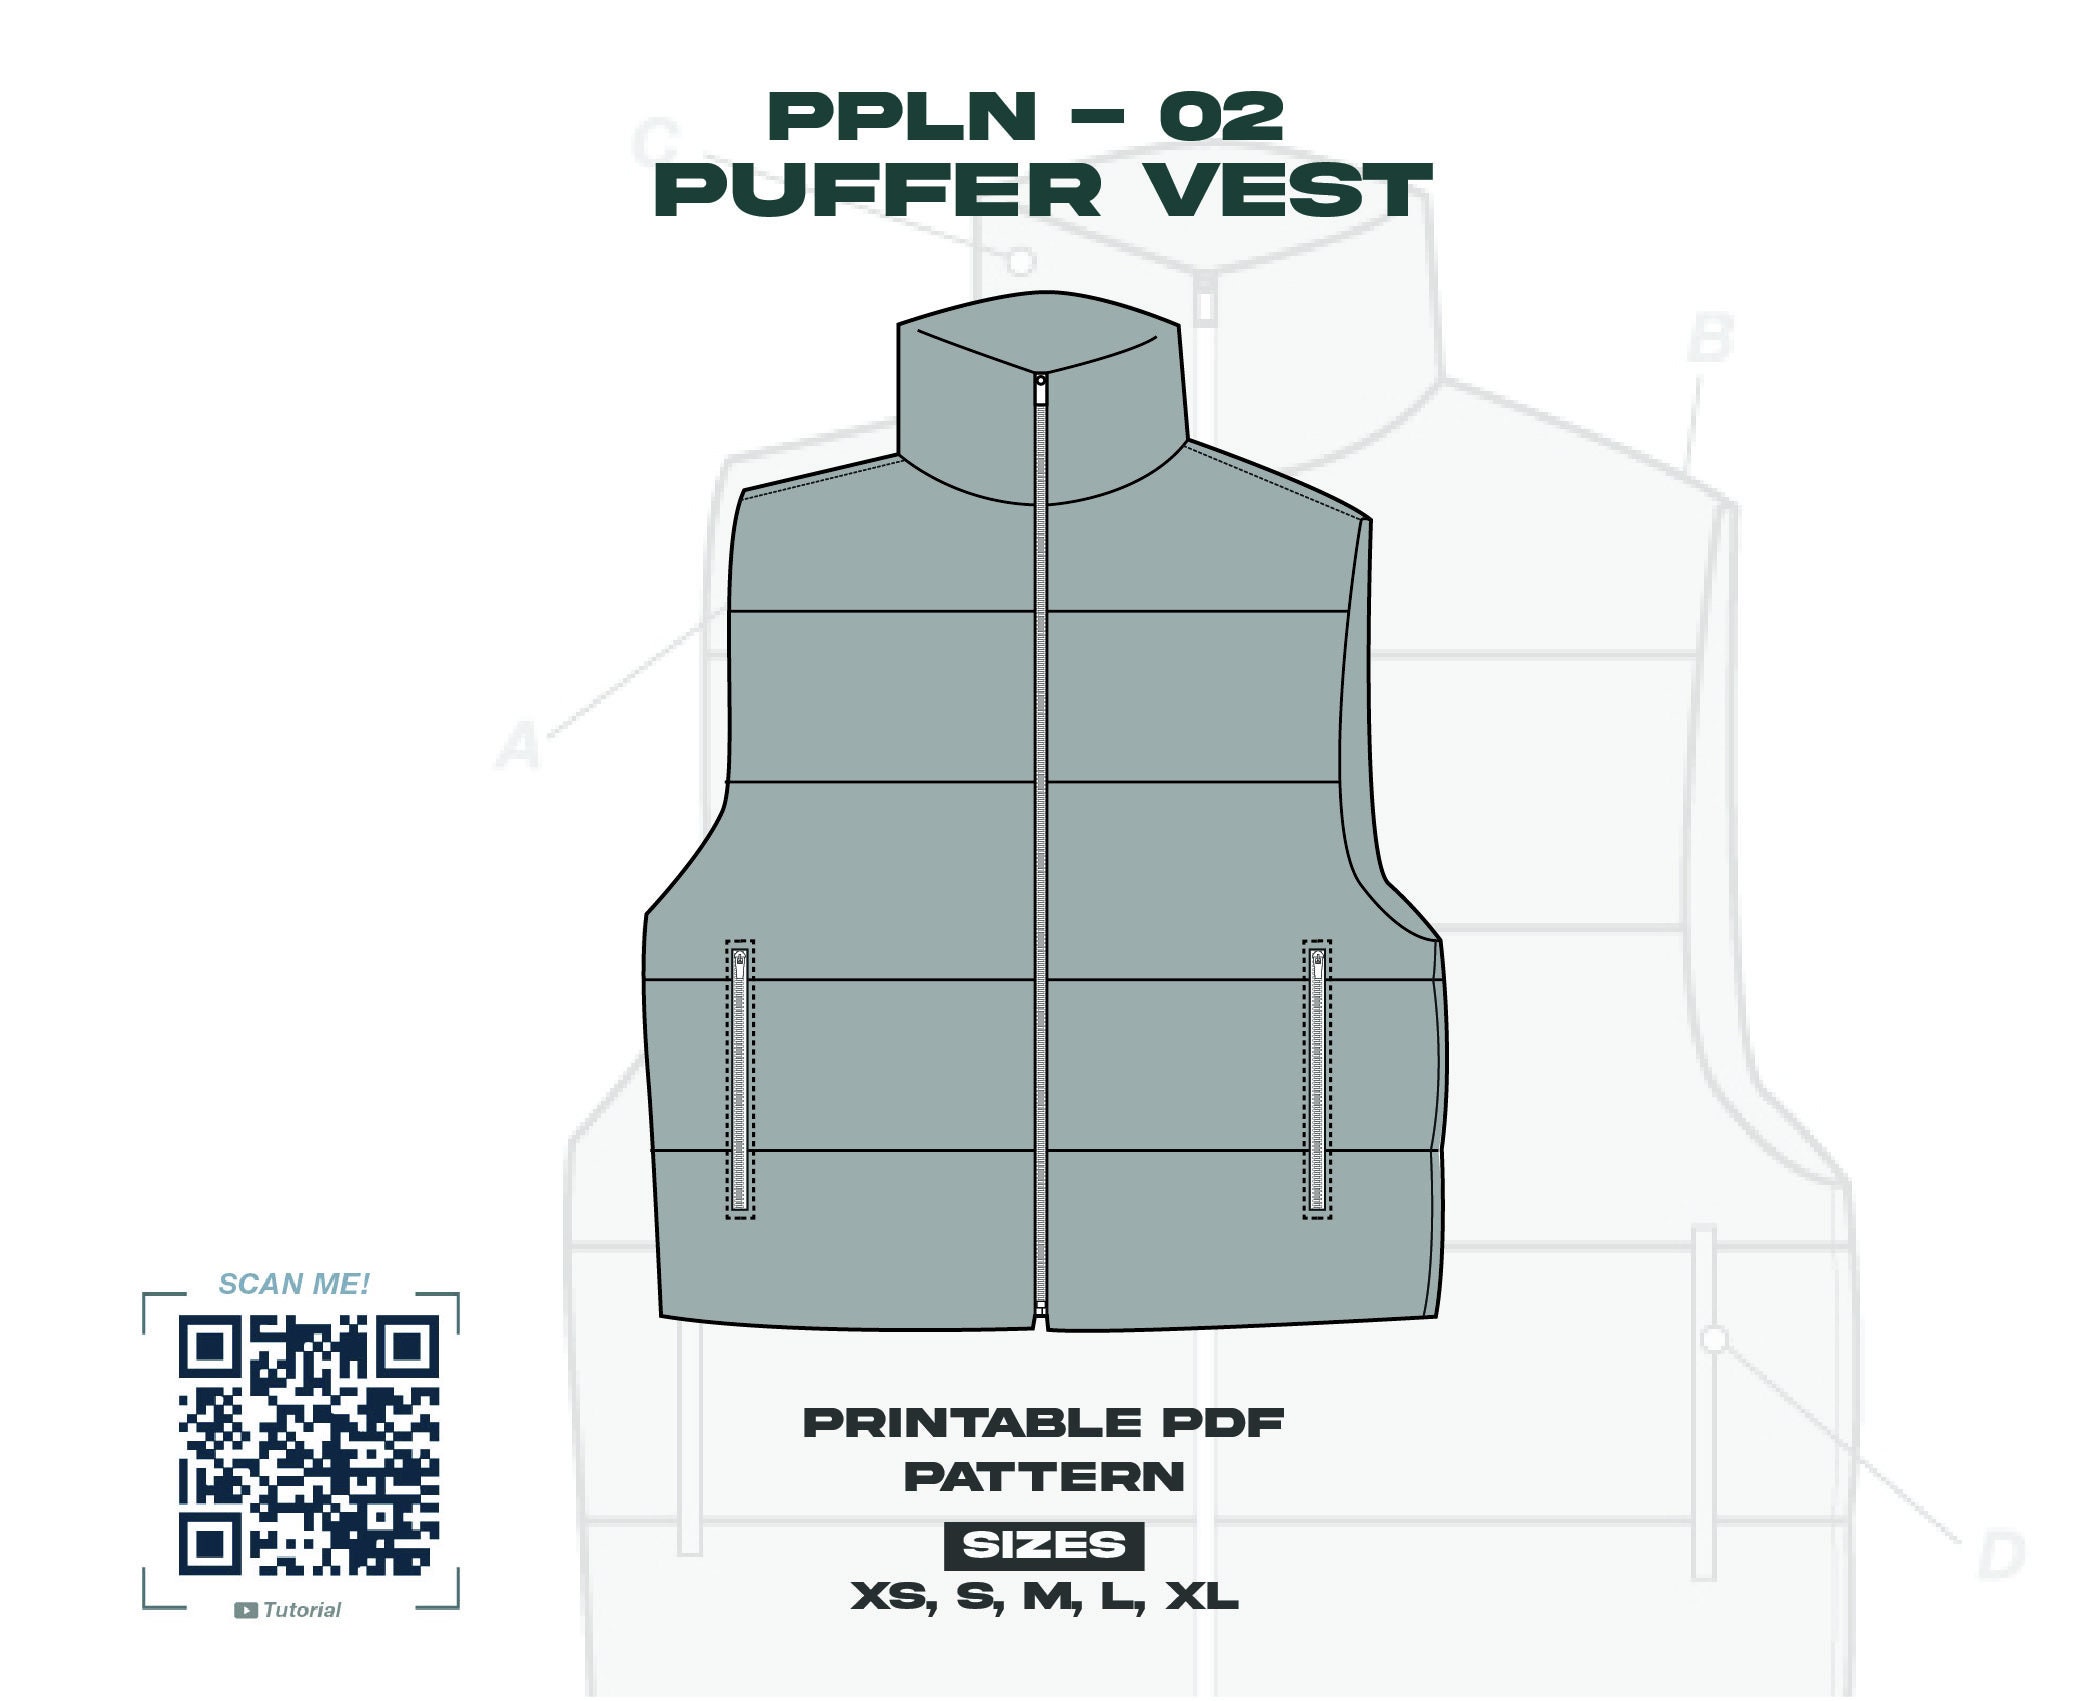 PPLN-02 Puffer Vest Printable PDF Pattern 